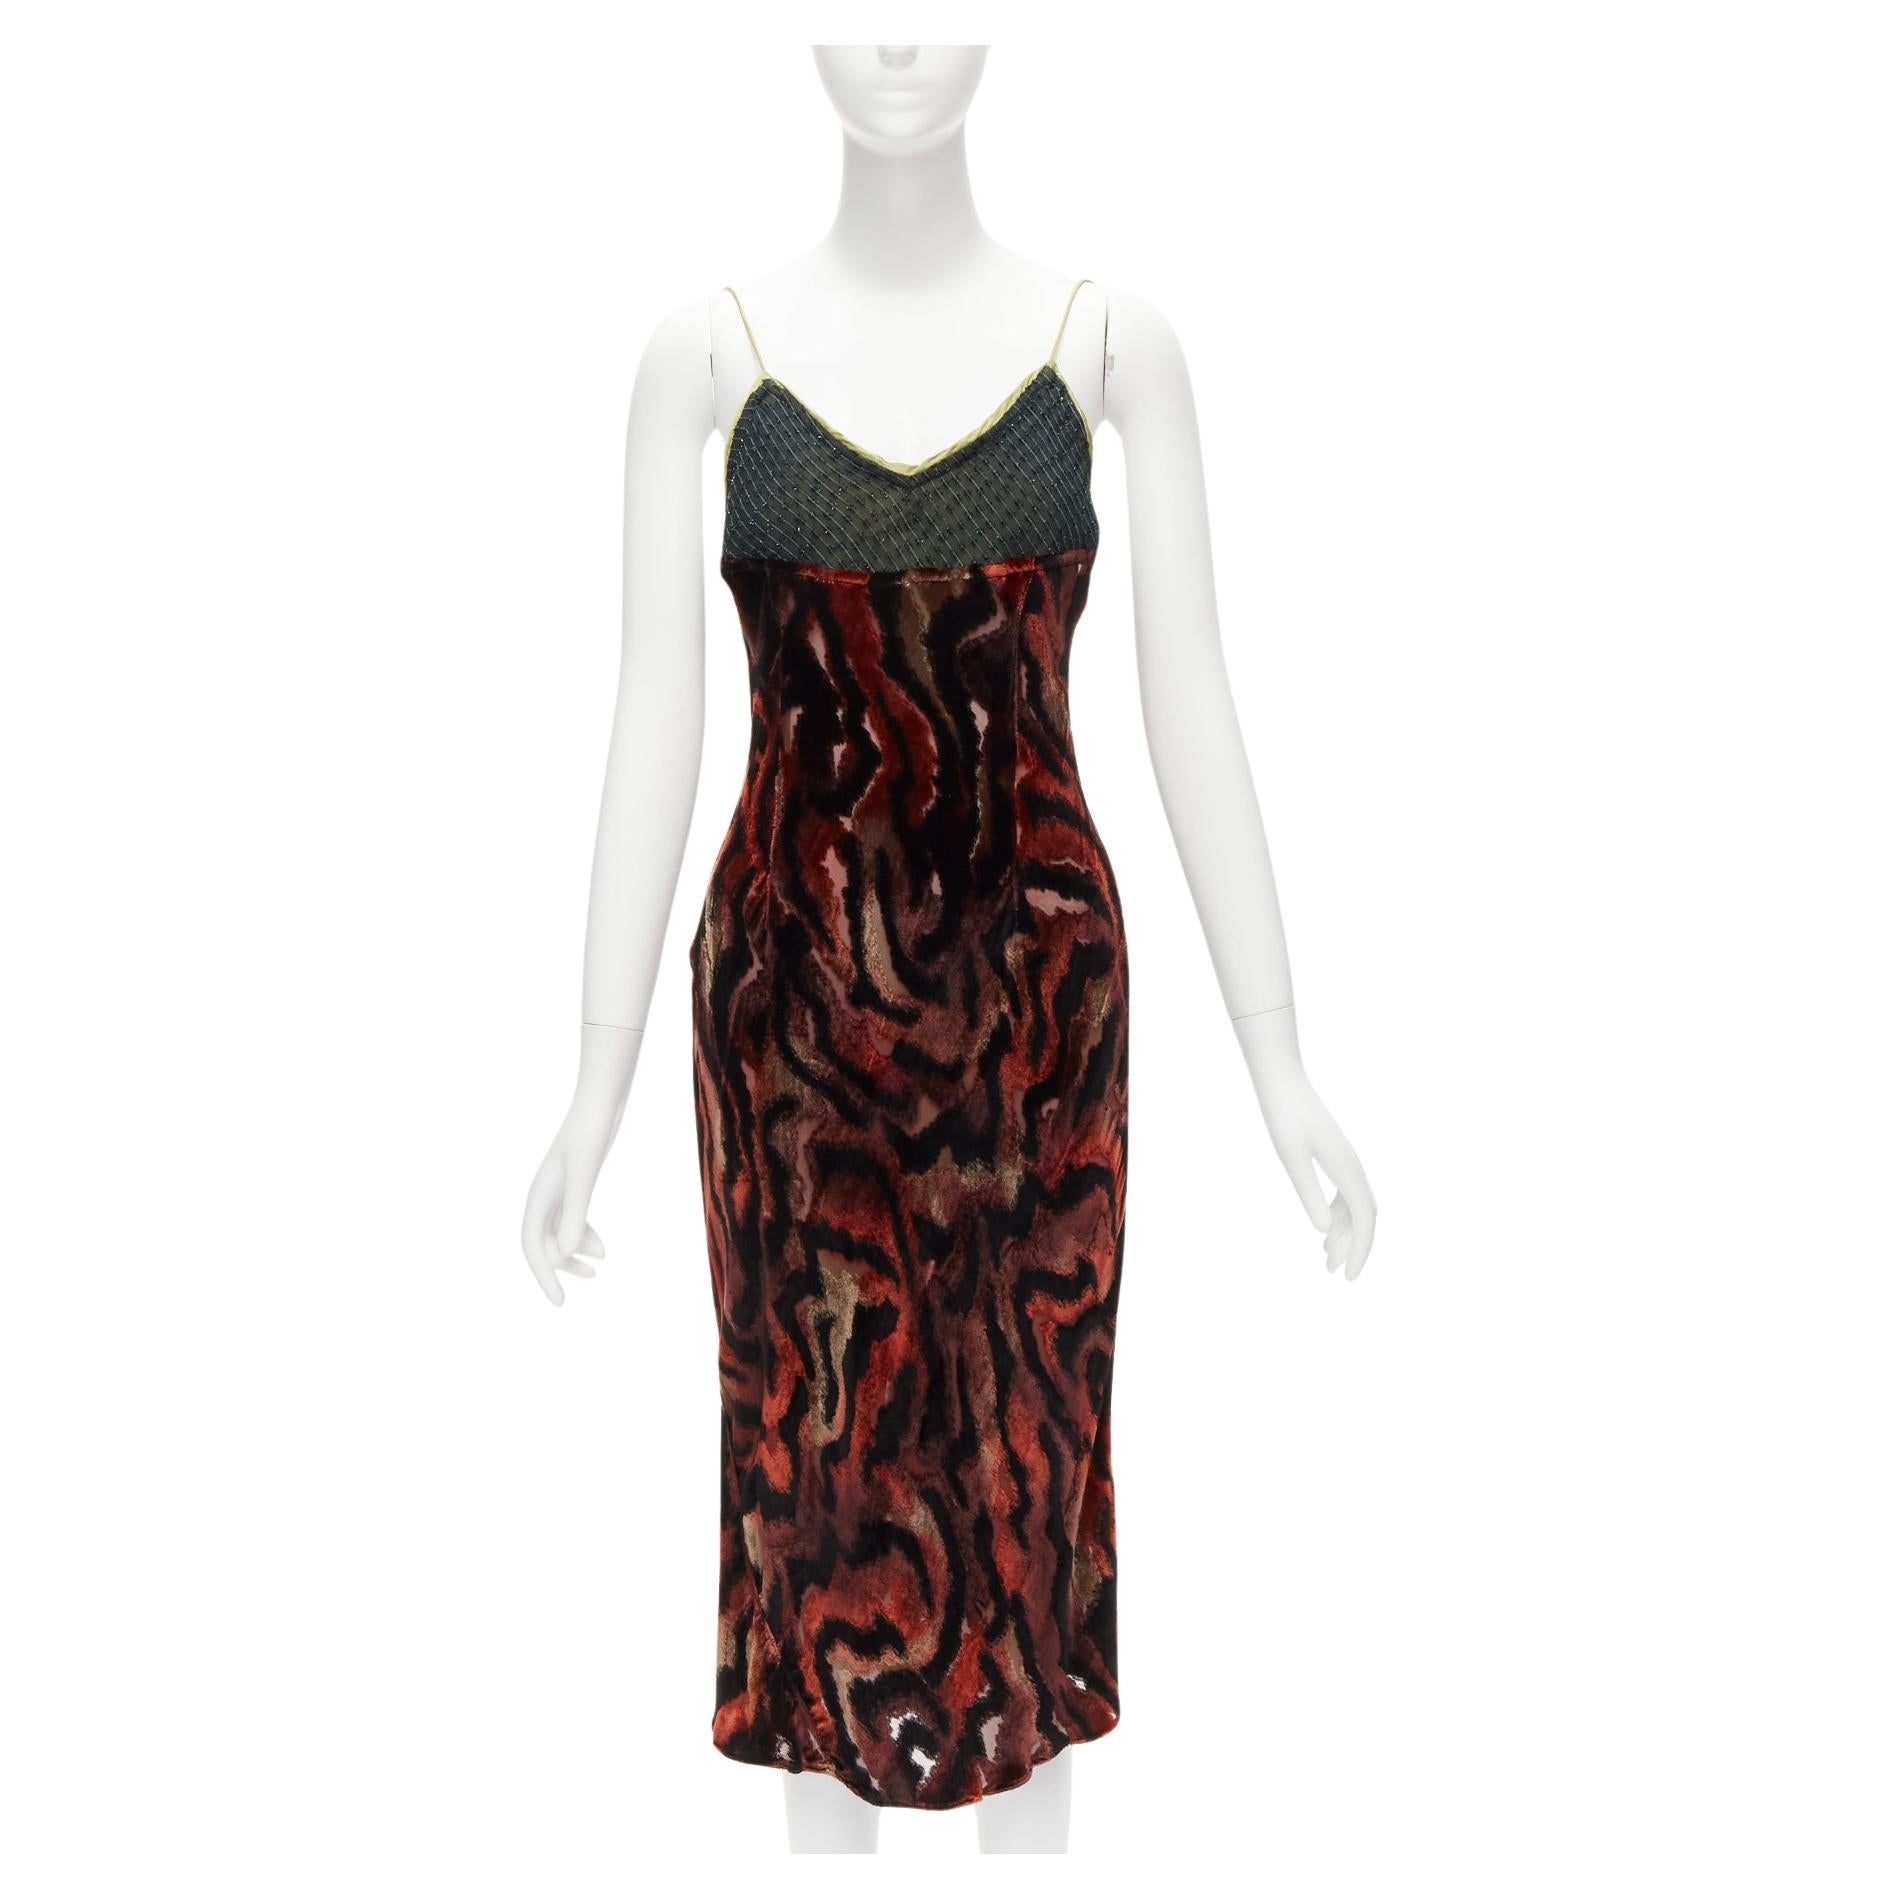 VOYAGE INVEST IN THE ORIGINAL LONDON swirl velvet sheer embroidebust slip dress For Sale